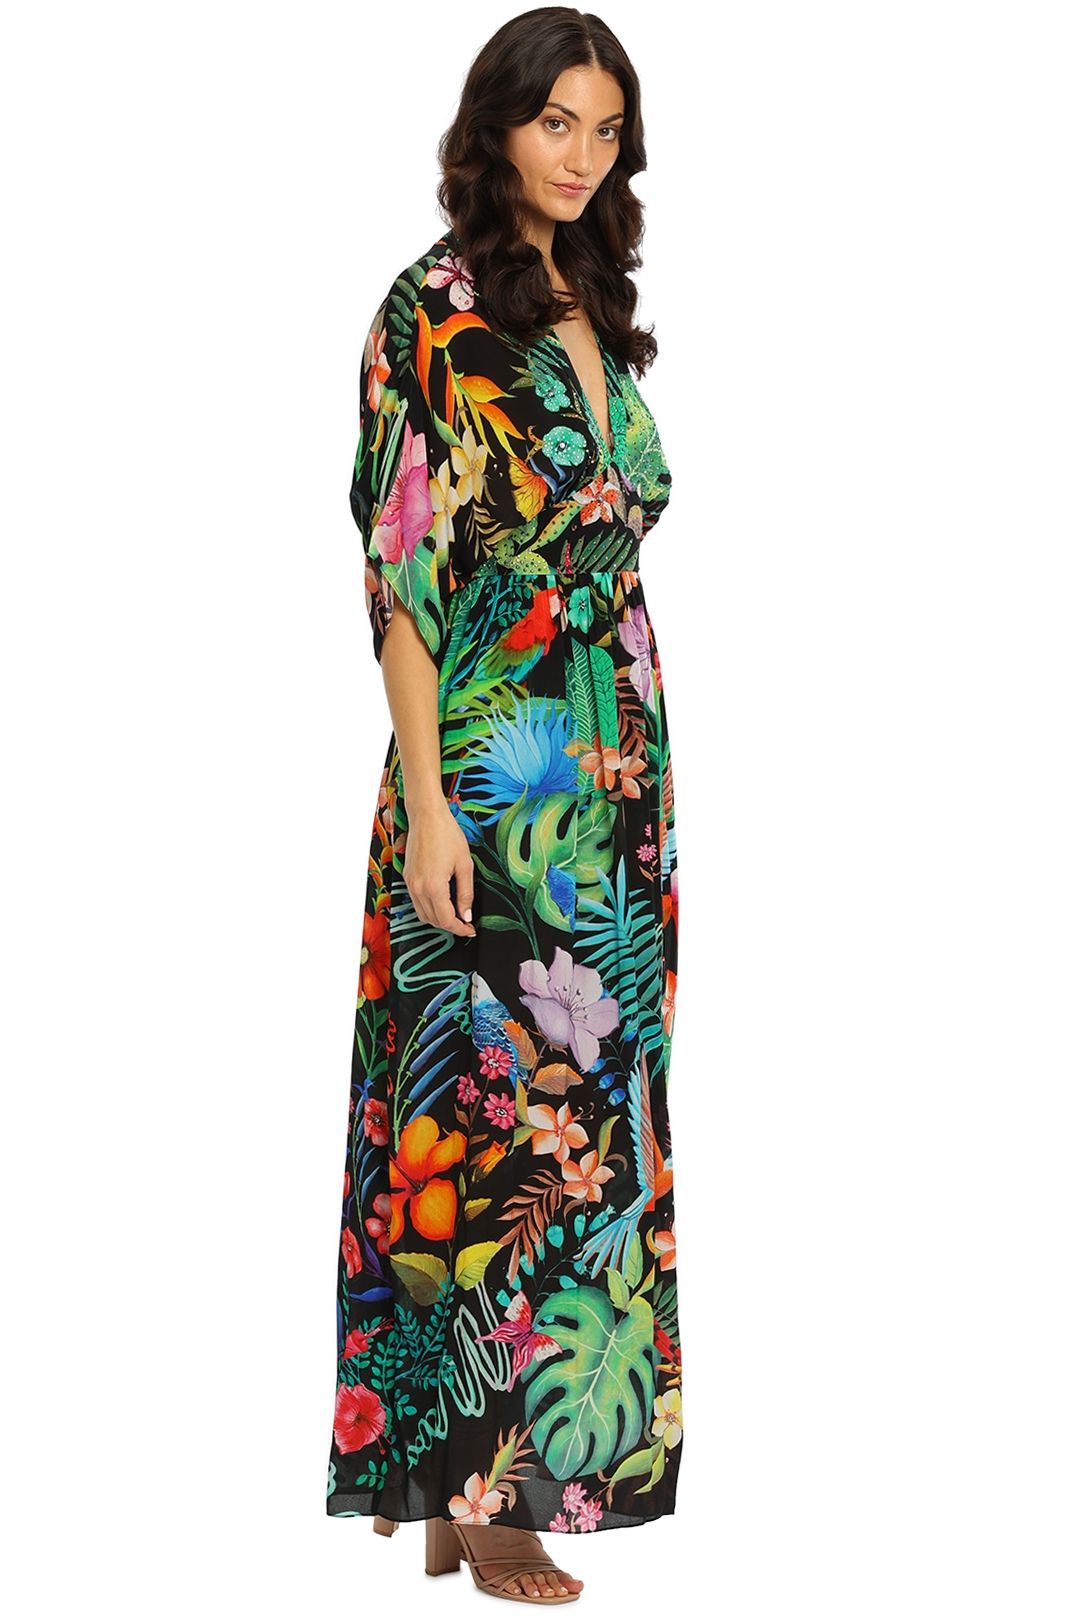 Czarina A Night In Rio Maxi Dress Tropical Print